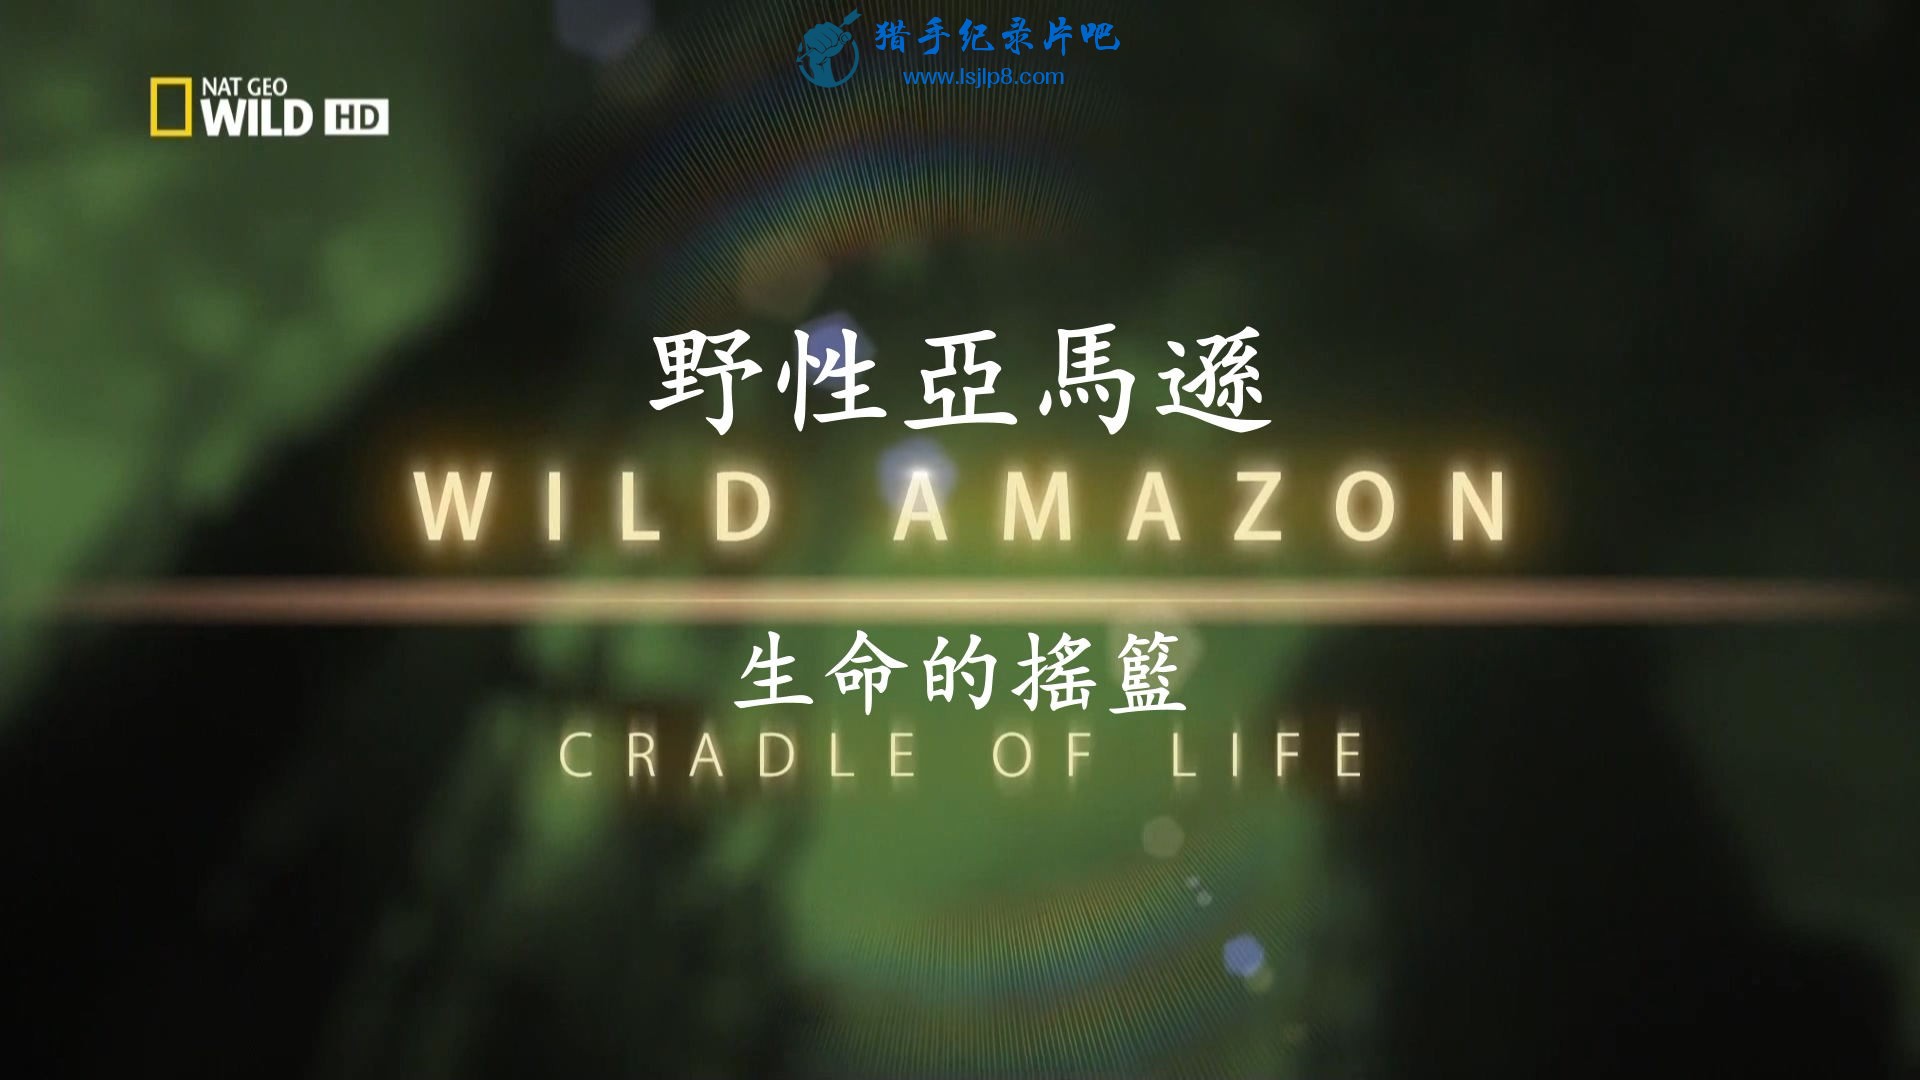 NG.Wild.Amazon.1of2.Cradle.Of.Life.2010.1080p.HDTV.x264.jpg